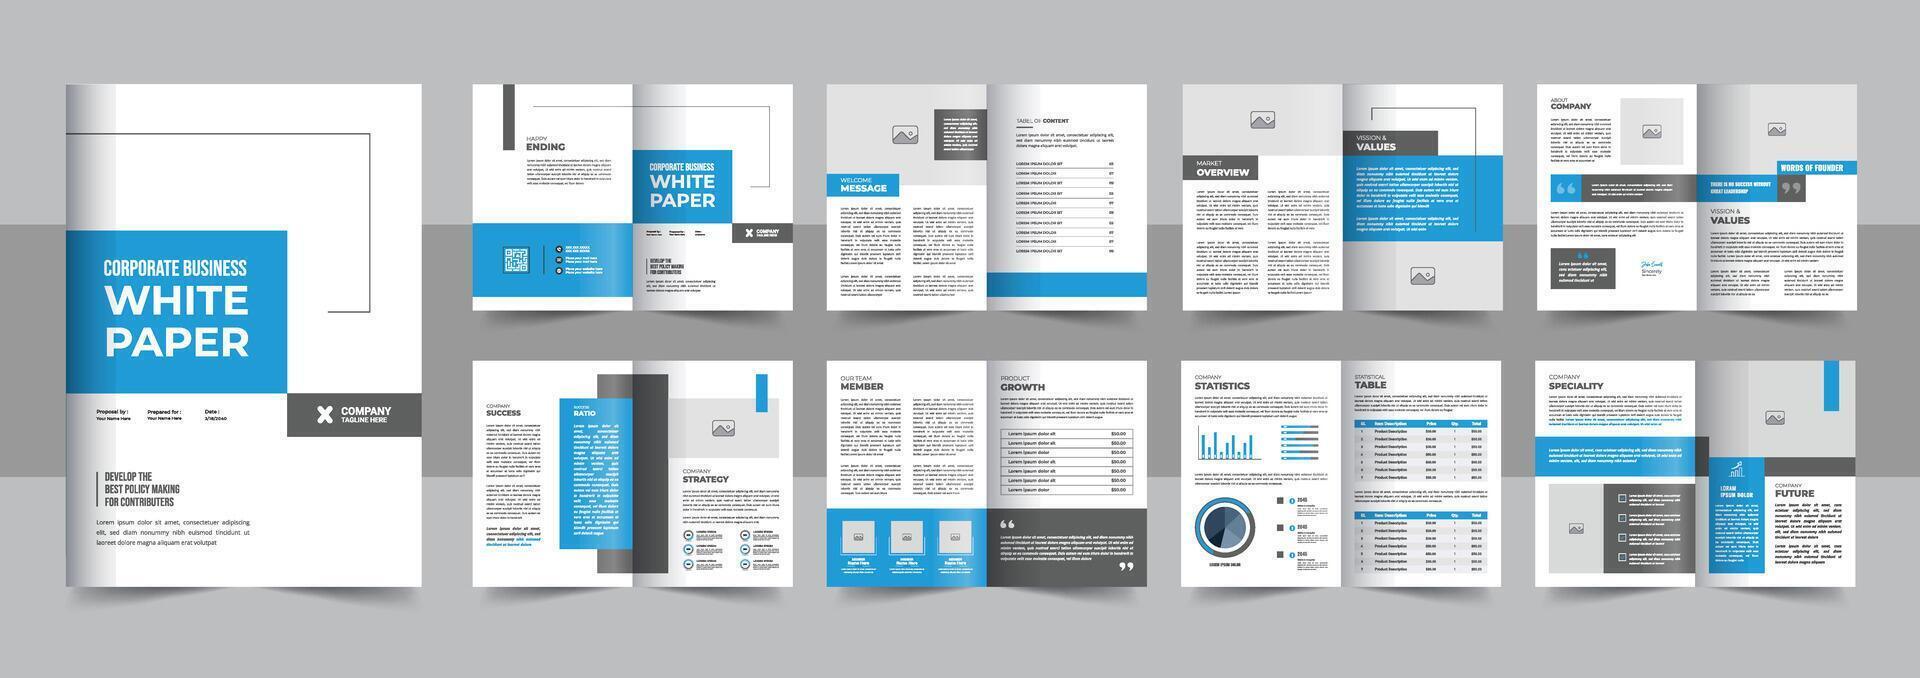 white paper or white paper layout design, Company brochure design template vector